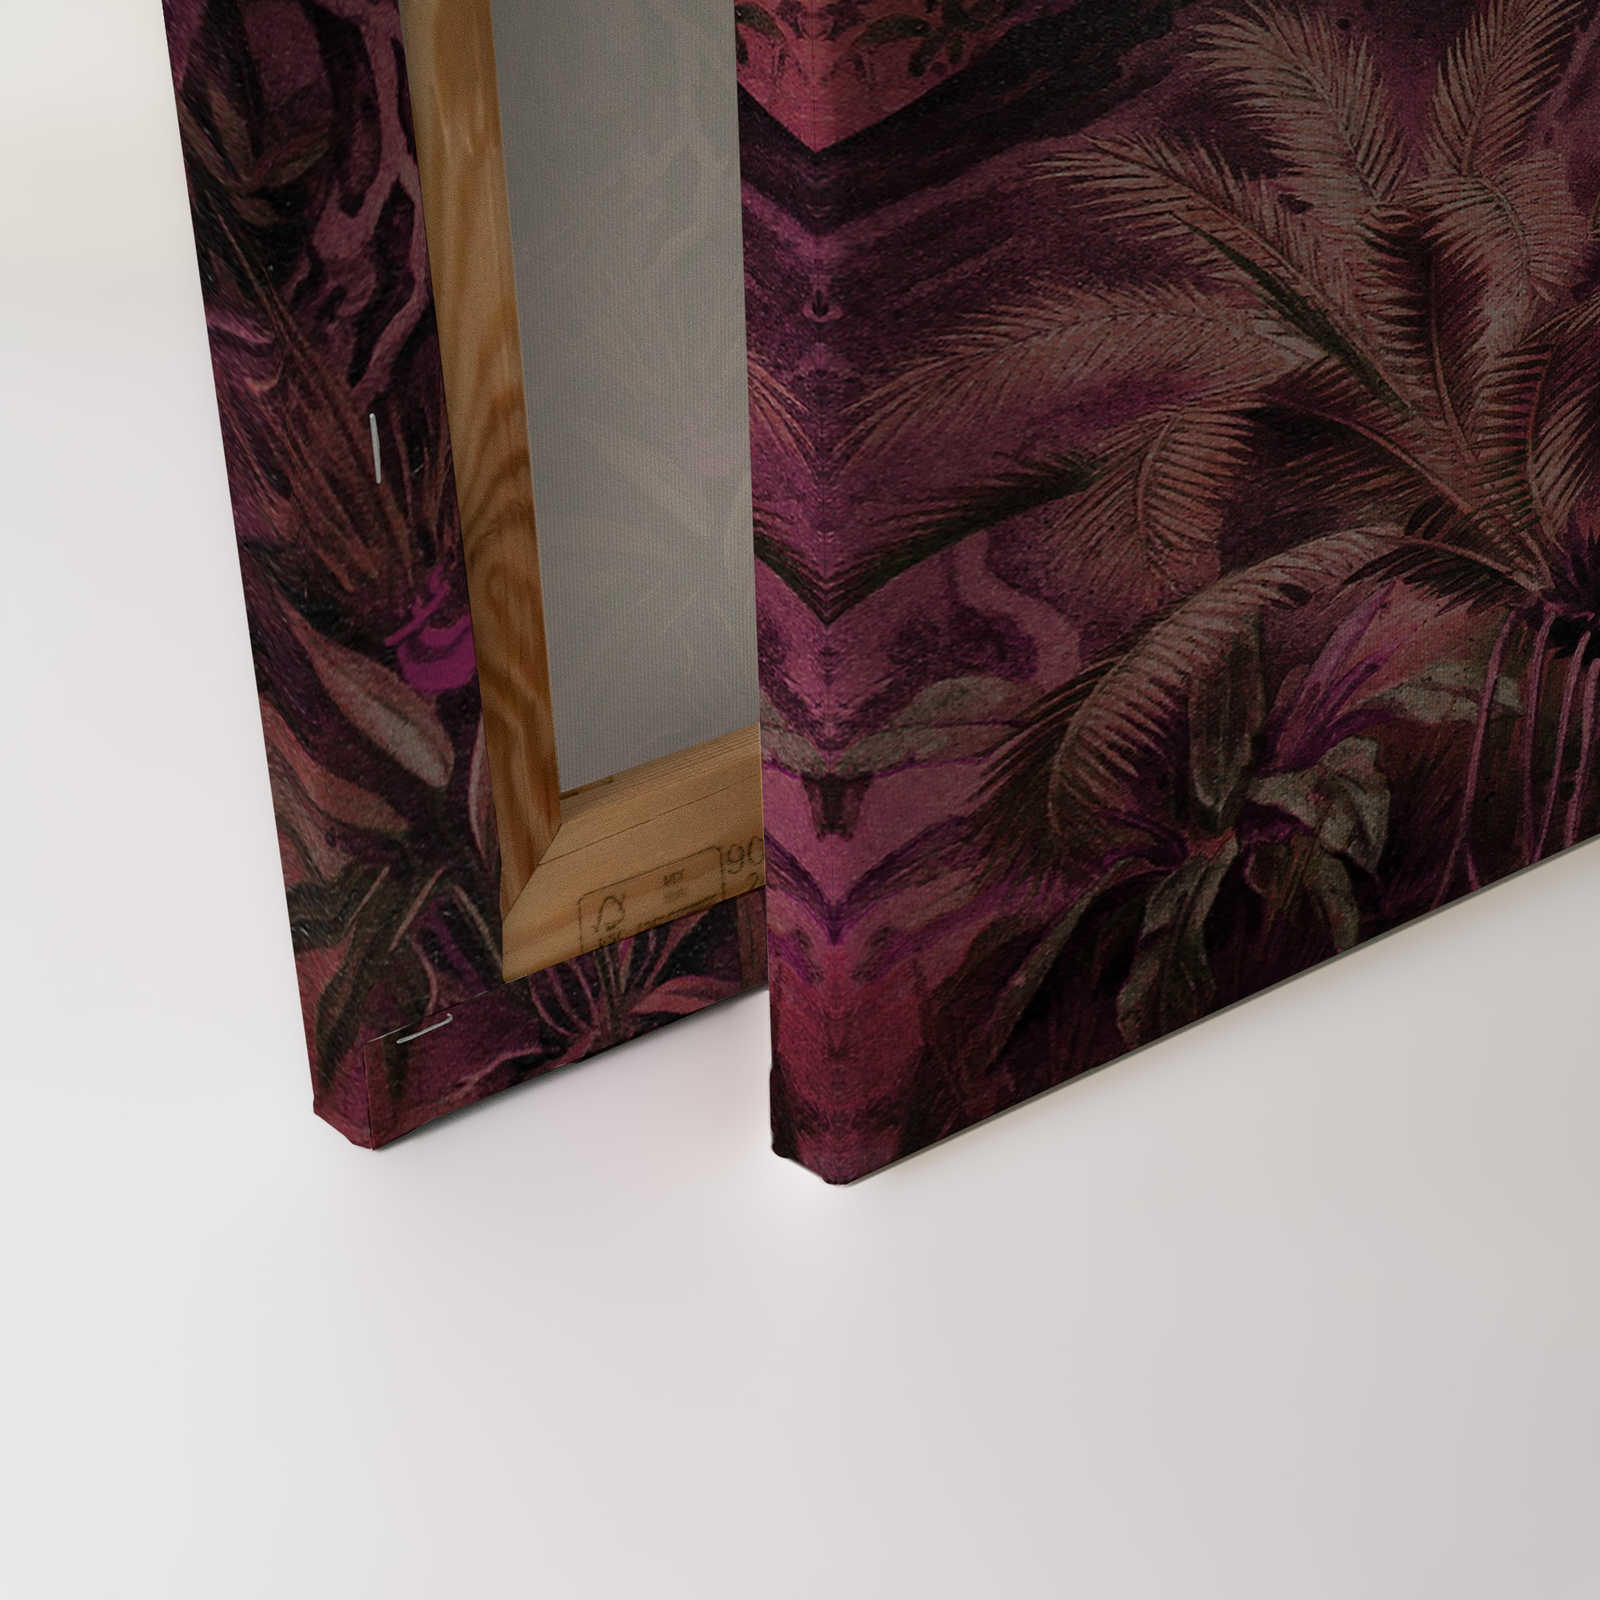             Toile jungle style dessin | violet, vert - 0,90 m x 0,60 m
        